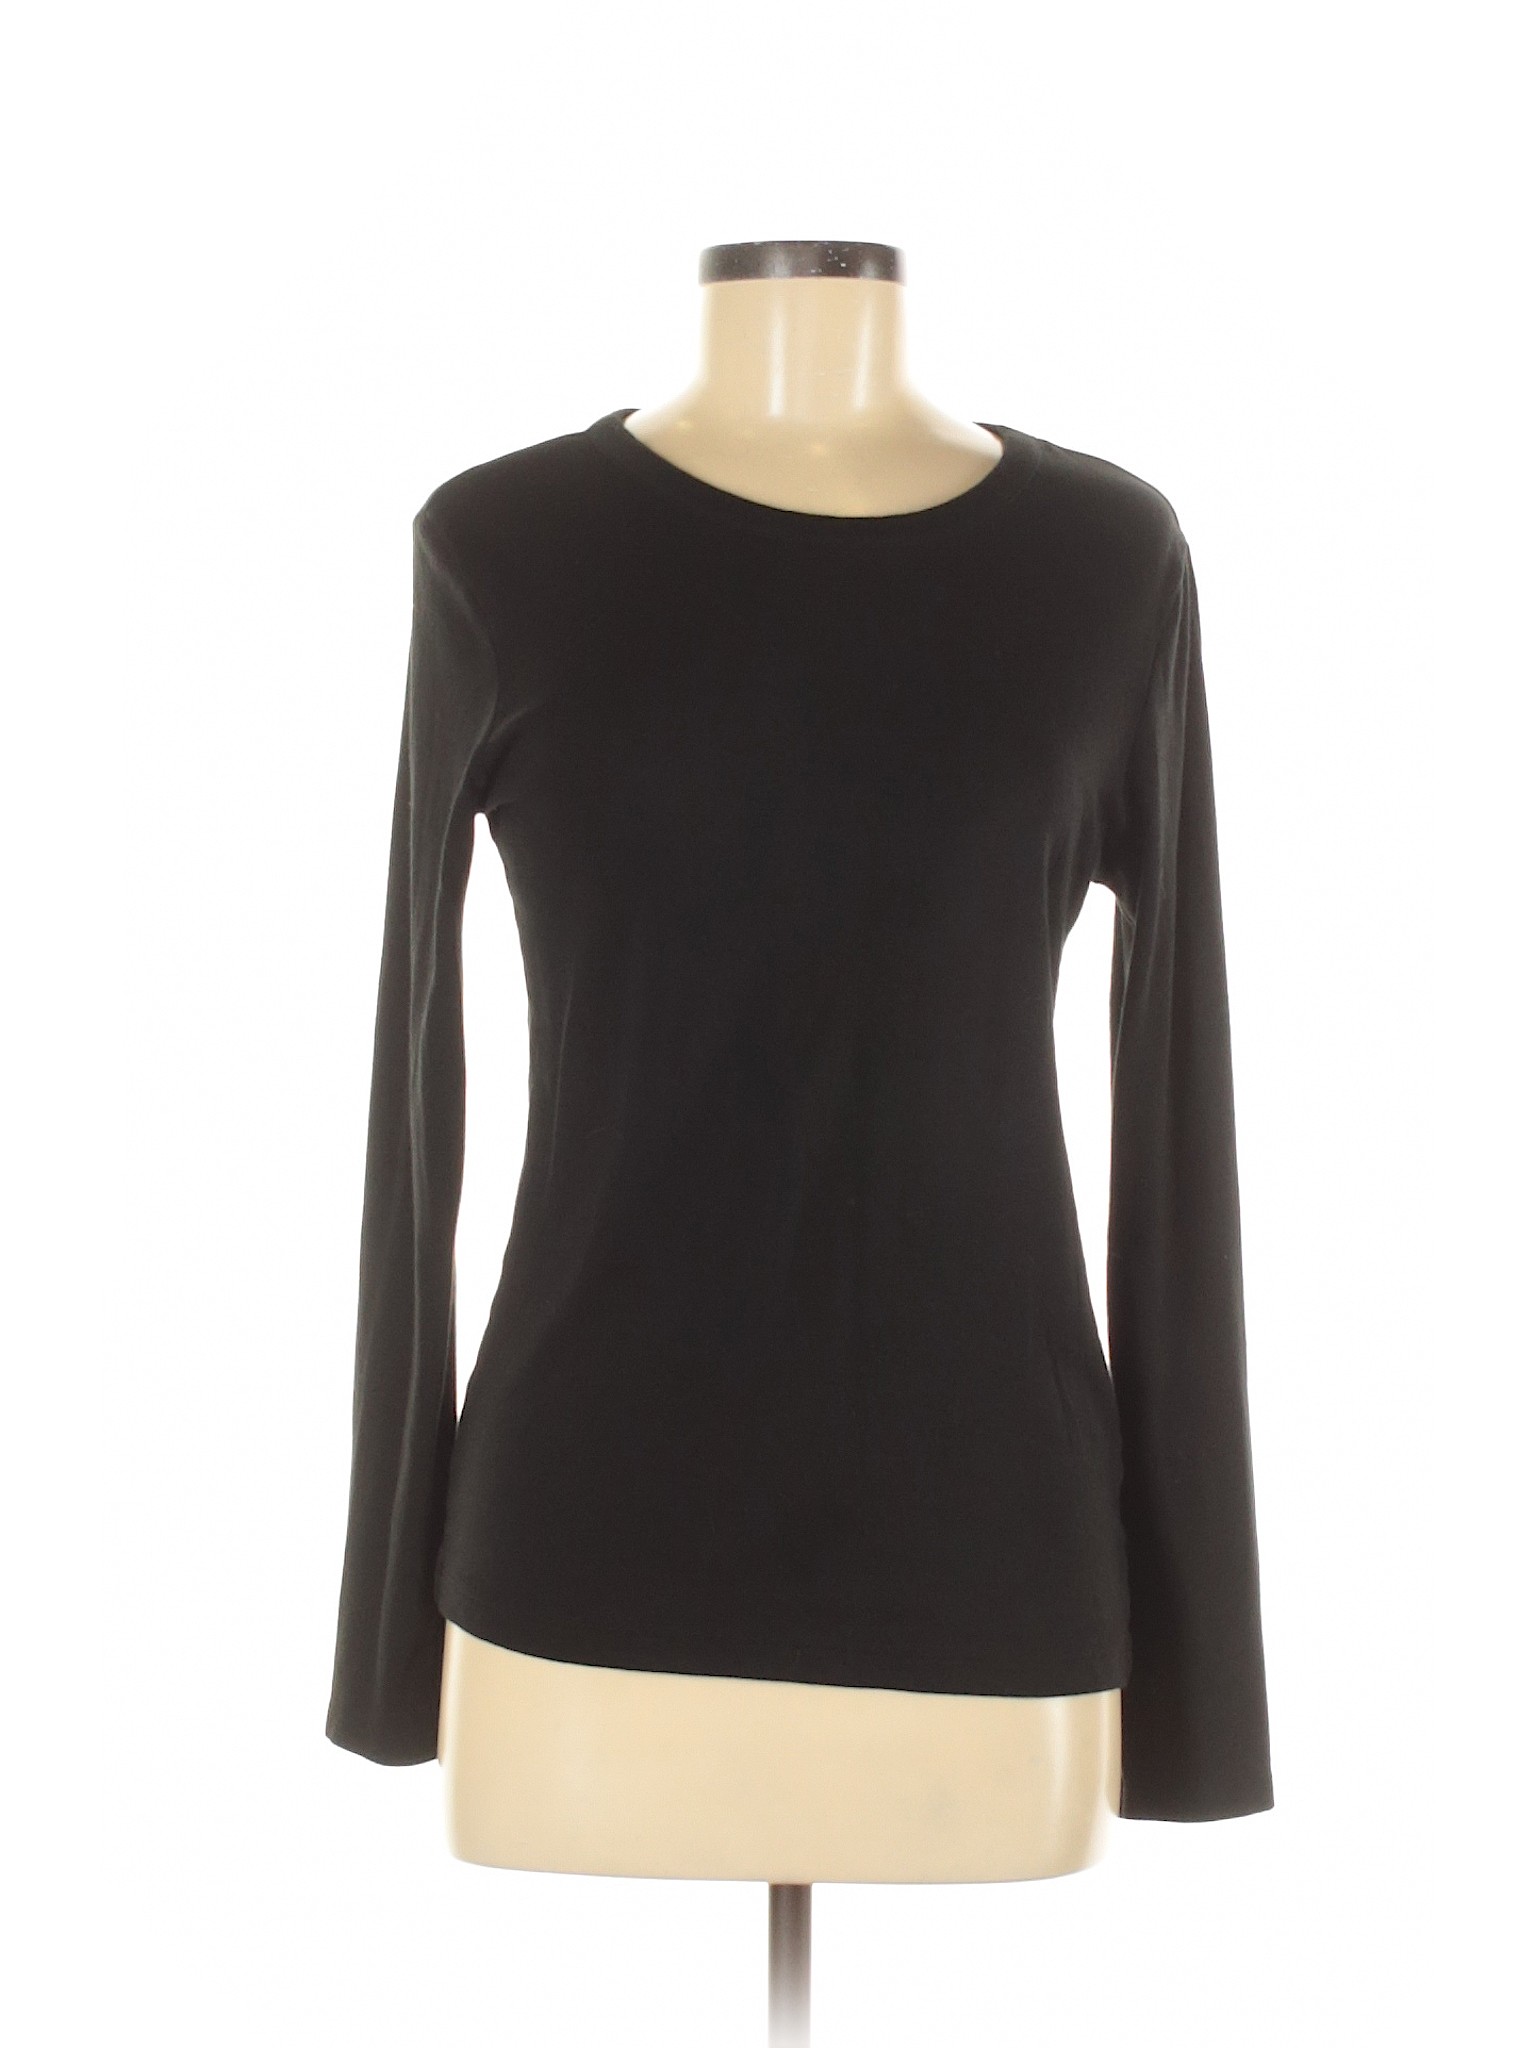 Jones & Co Women Black Long Sleeve T-Shirt M | eBay